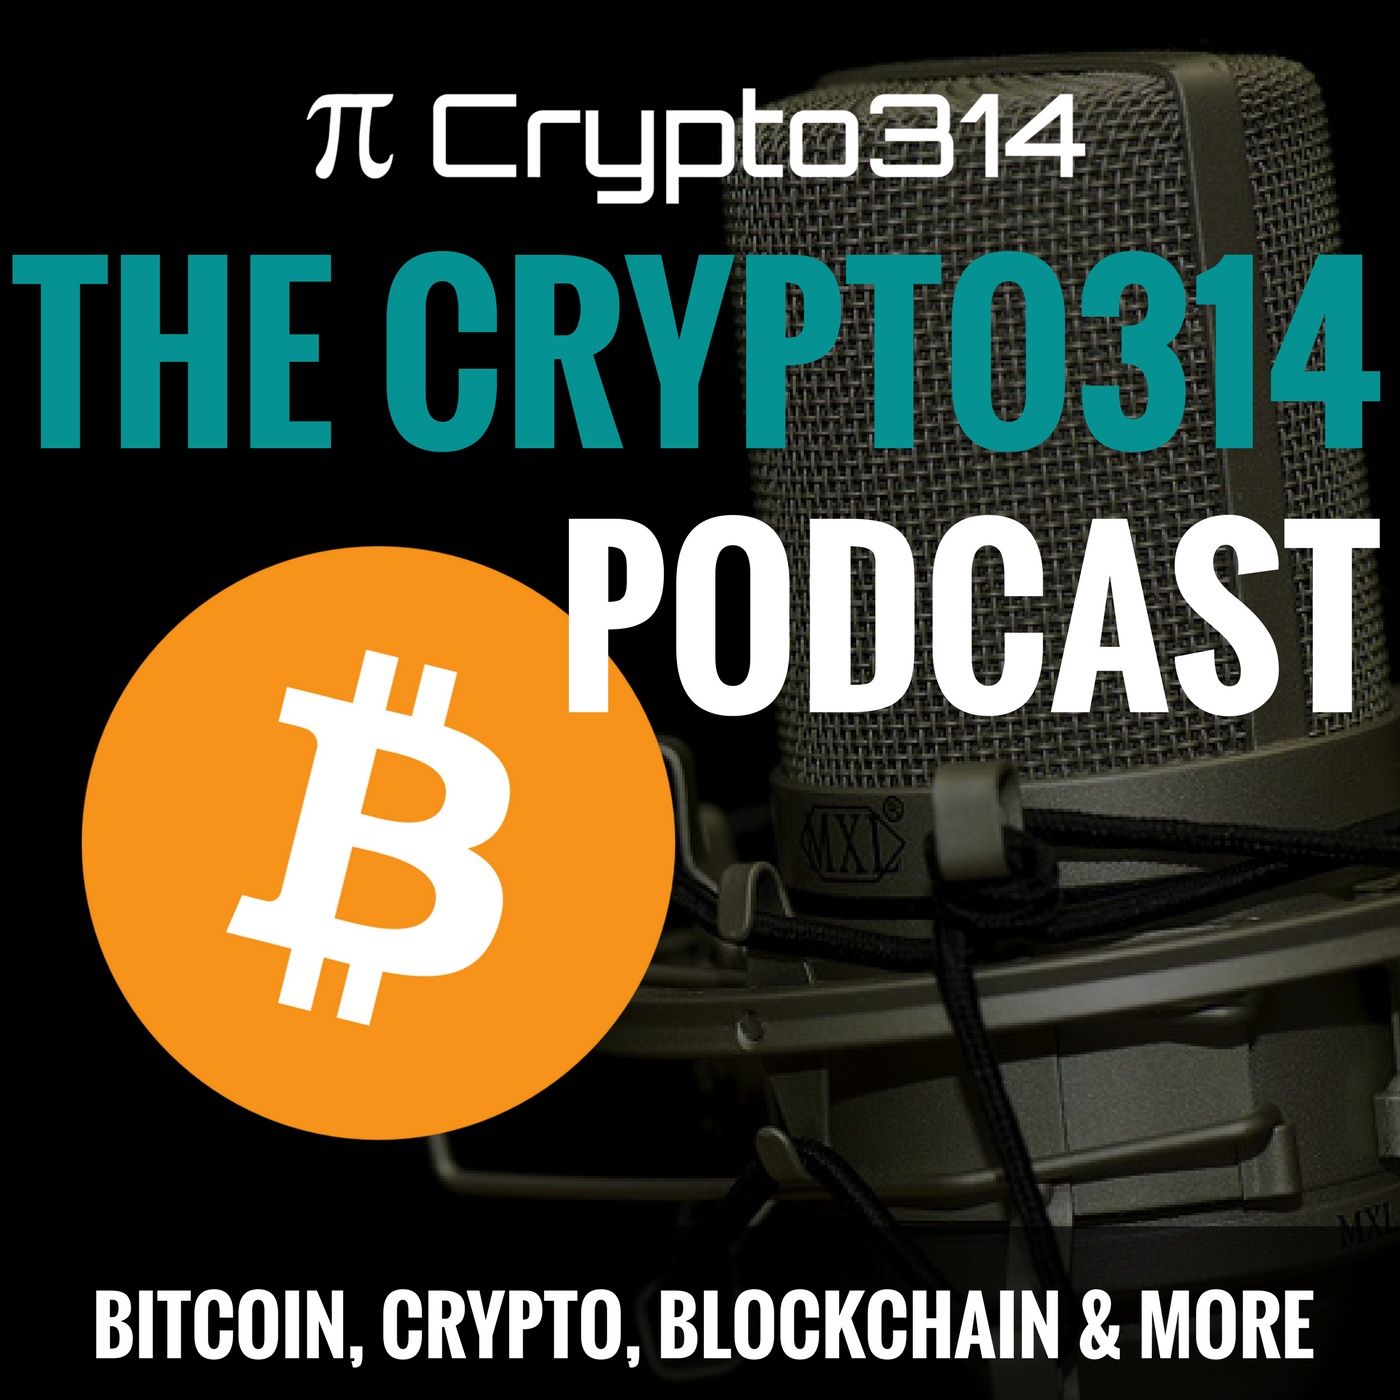 The Crypto314 Podcast